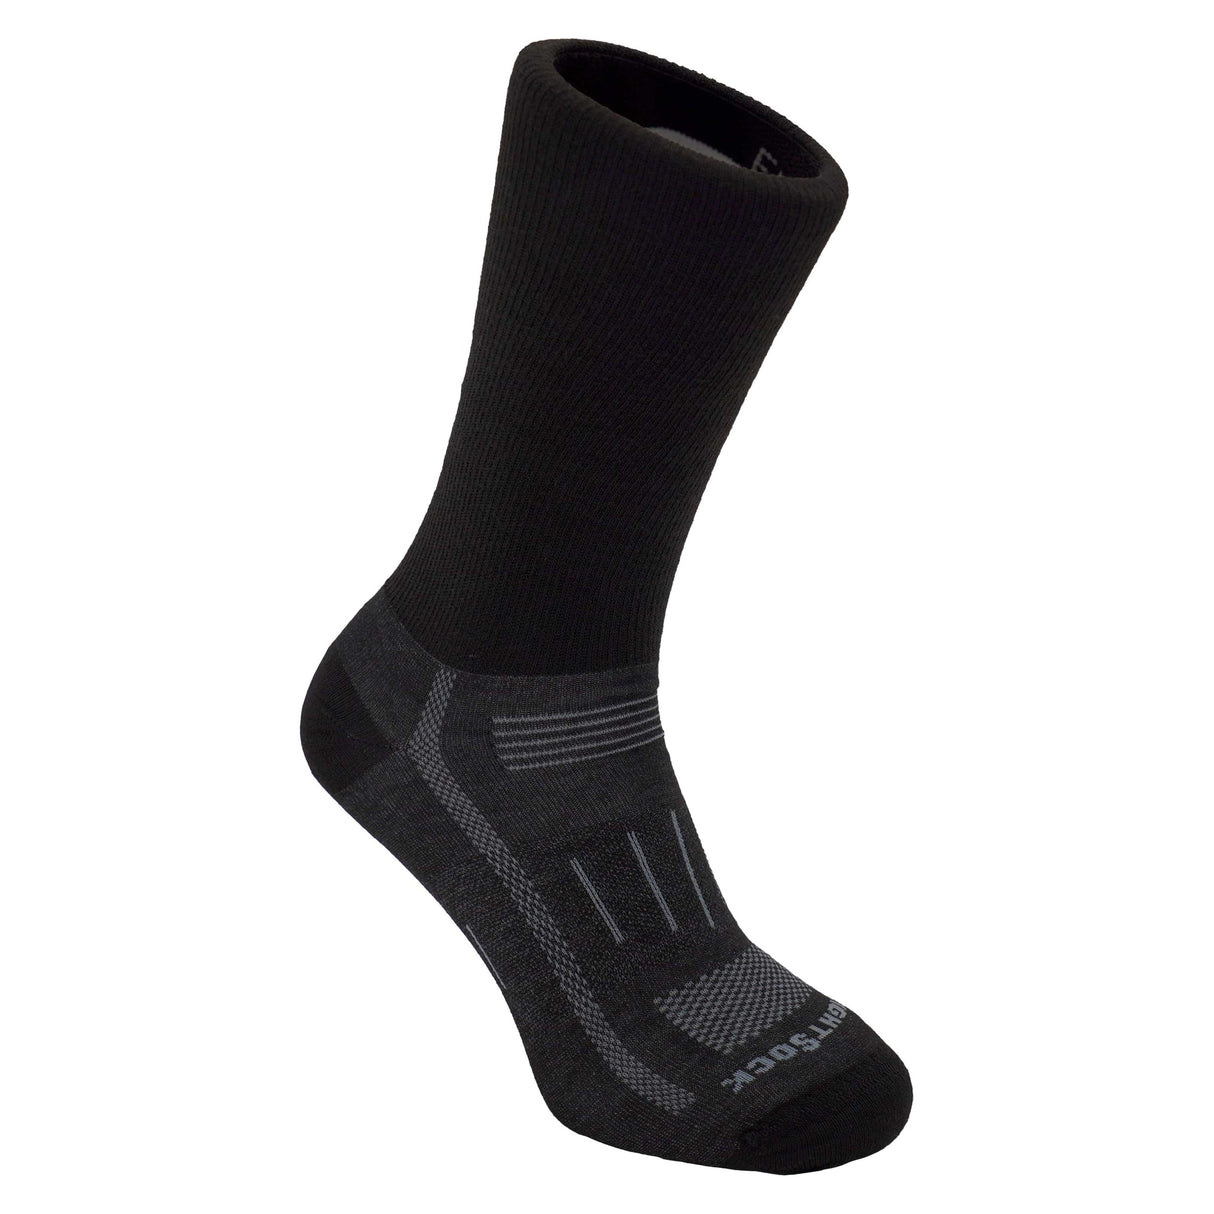 Wrightsock Double-Layer Endurance Crew Socks  -  Medium / Black